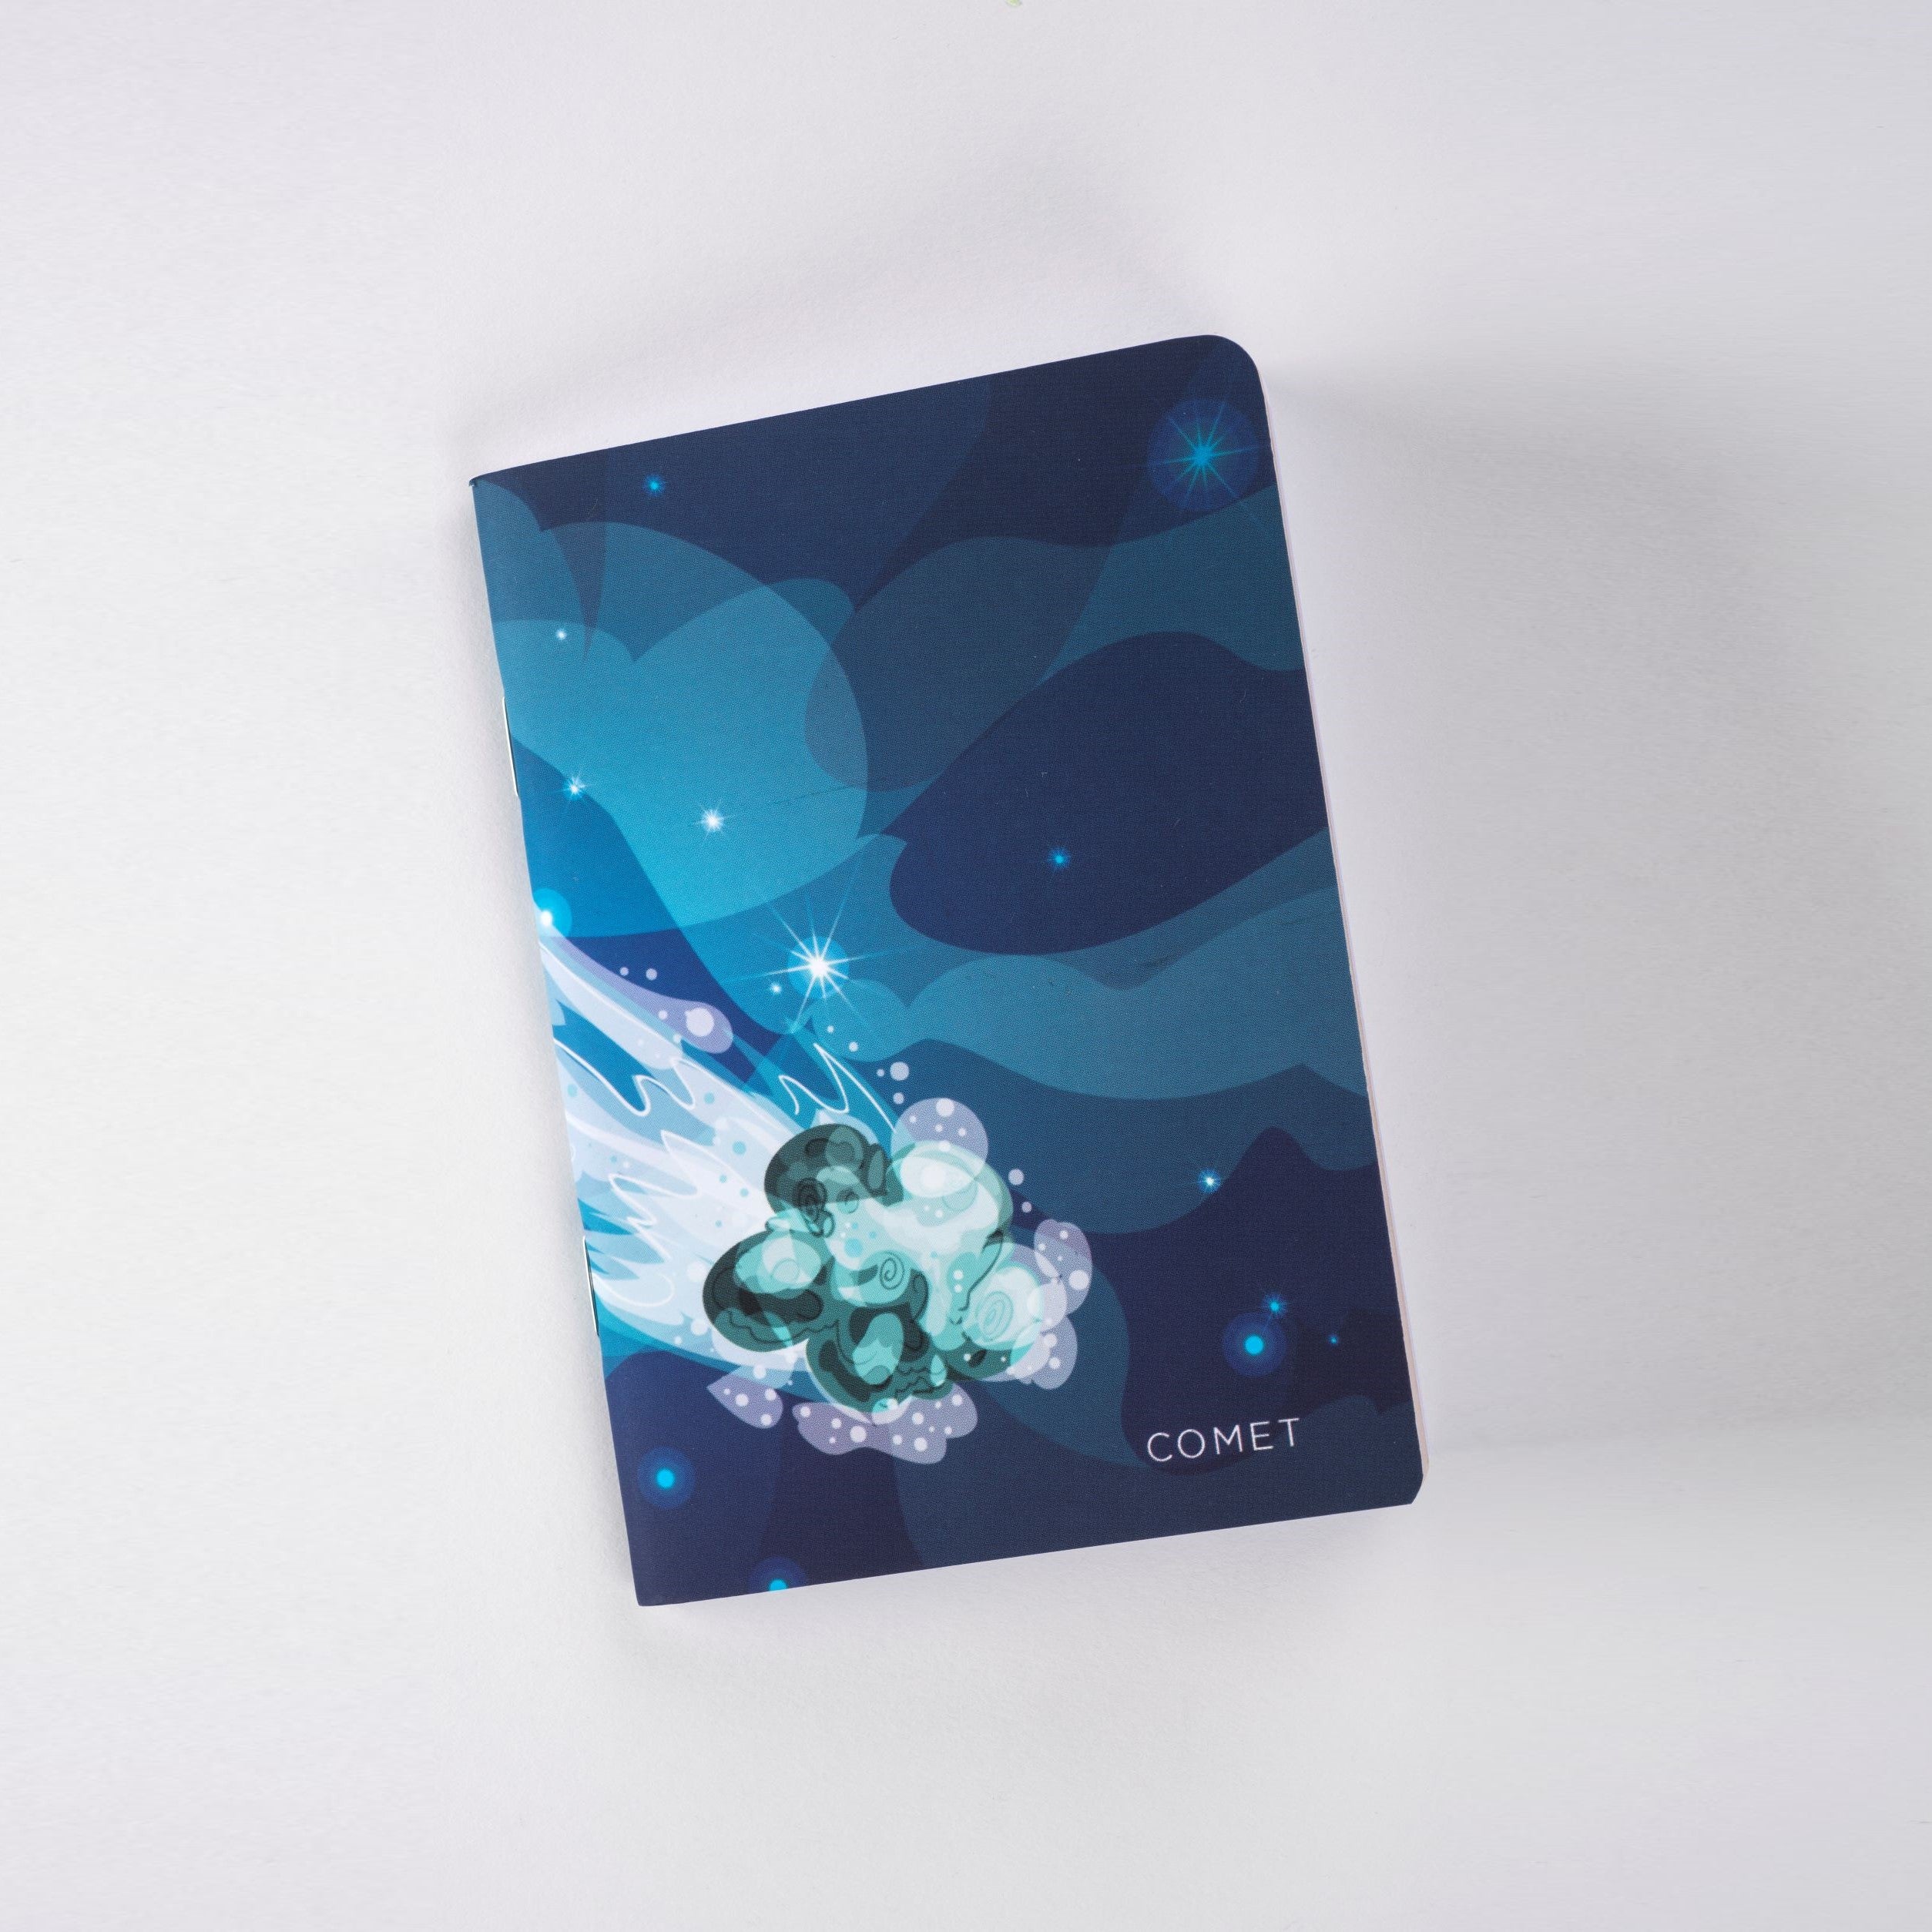 Space Pocket Journal